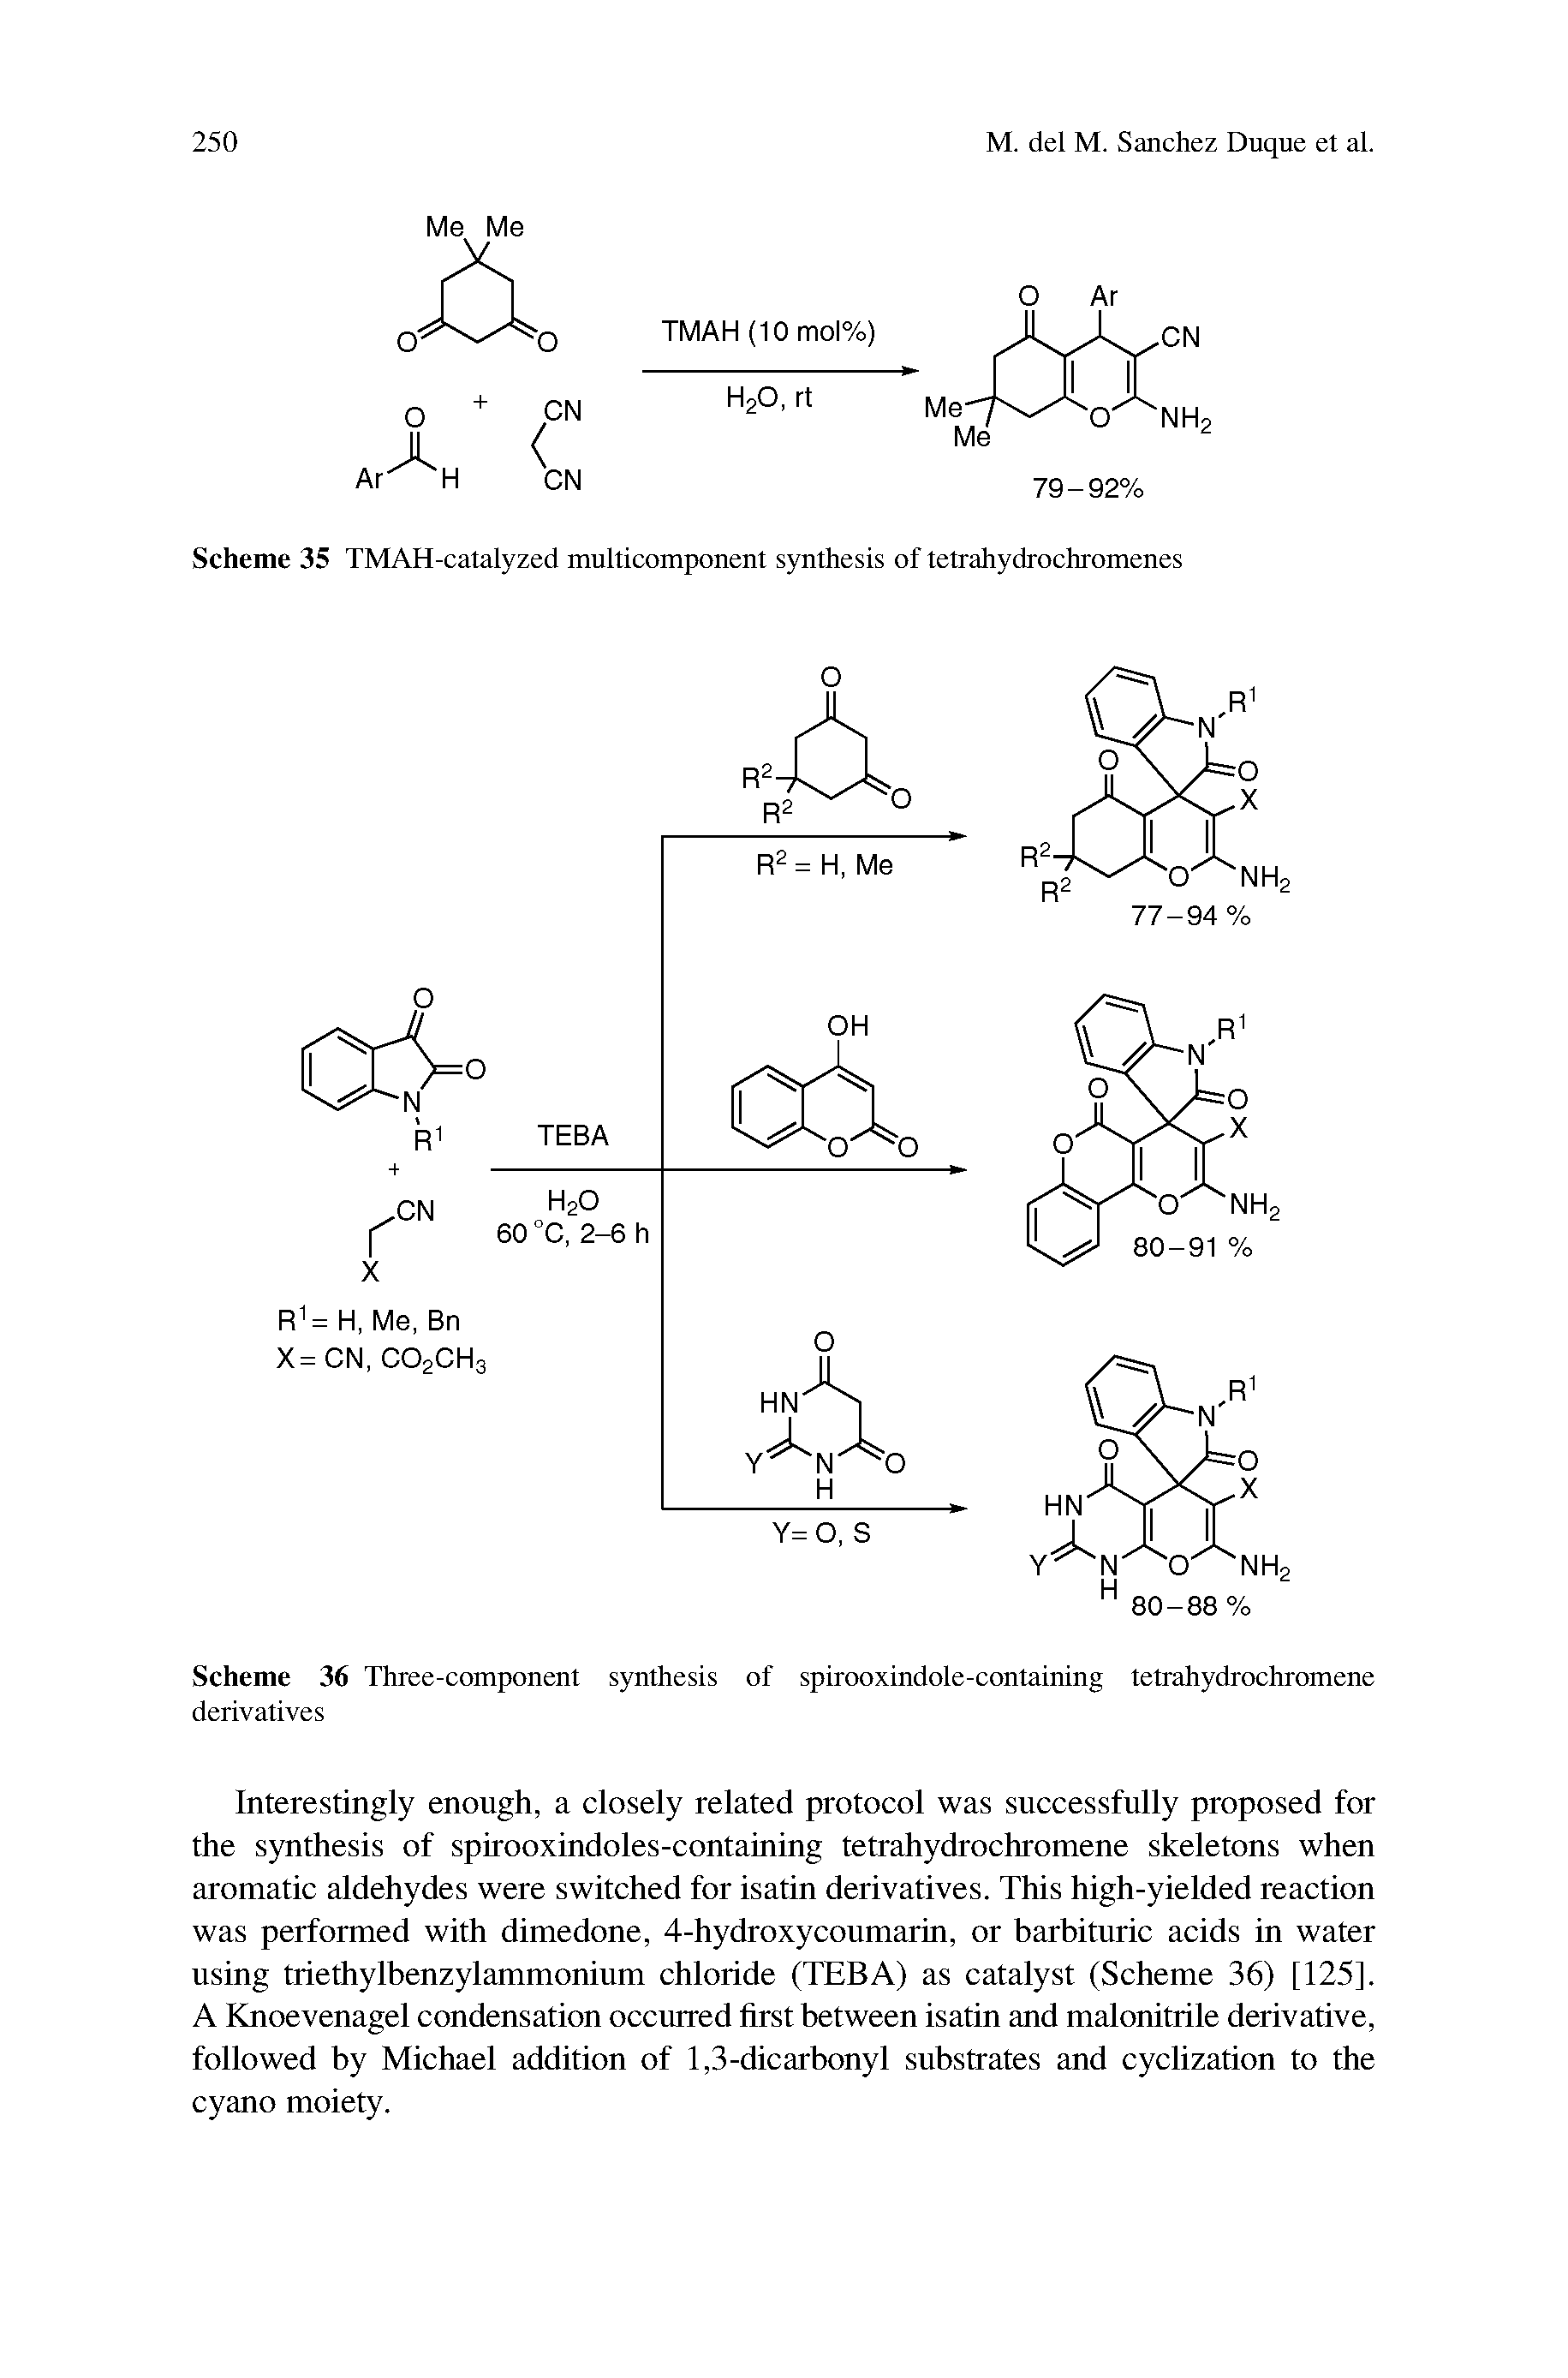 Scheme 36 Three-component synthesis of spirooxindole-containing tetrahydrochromene derivatives...